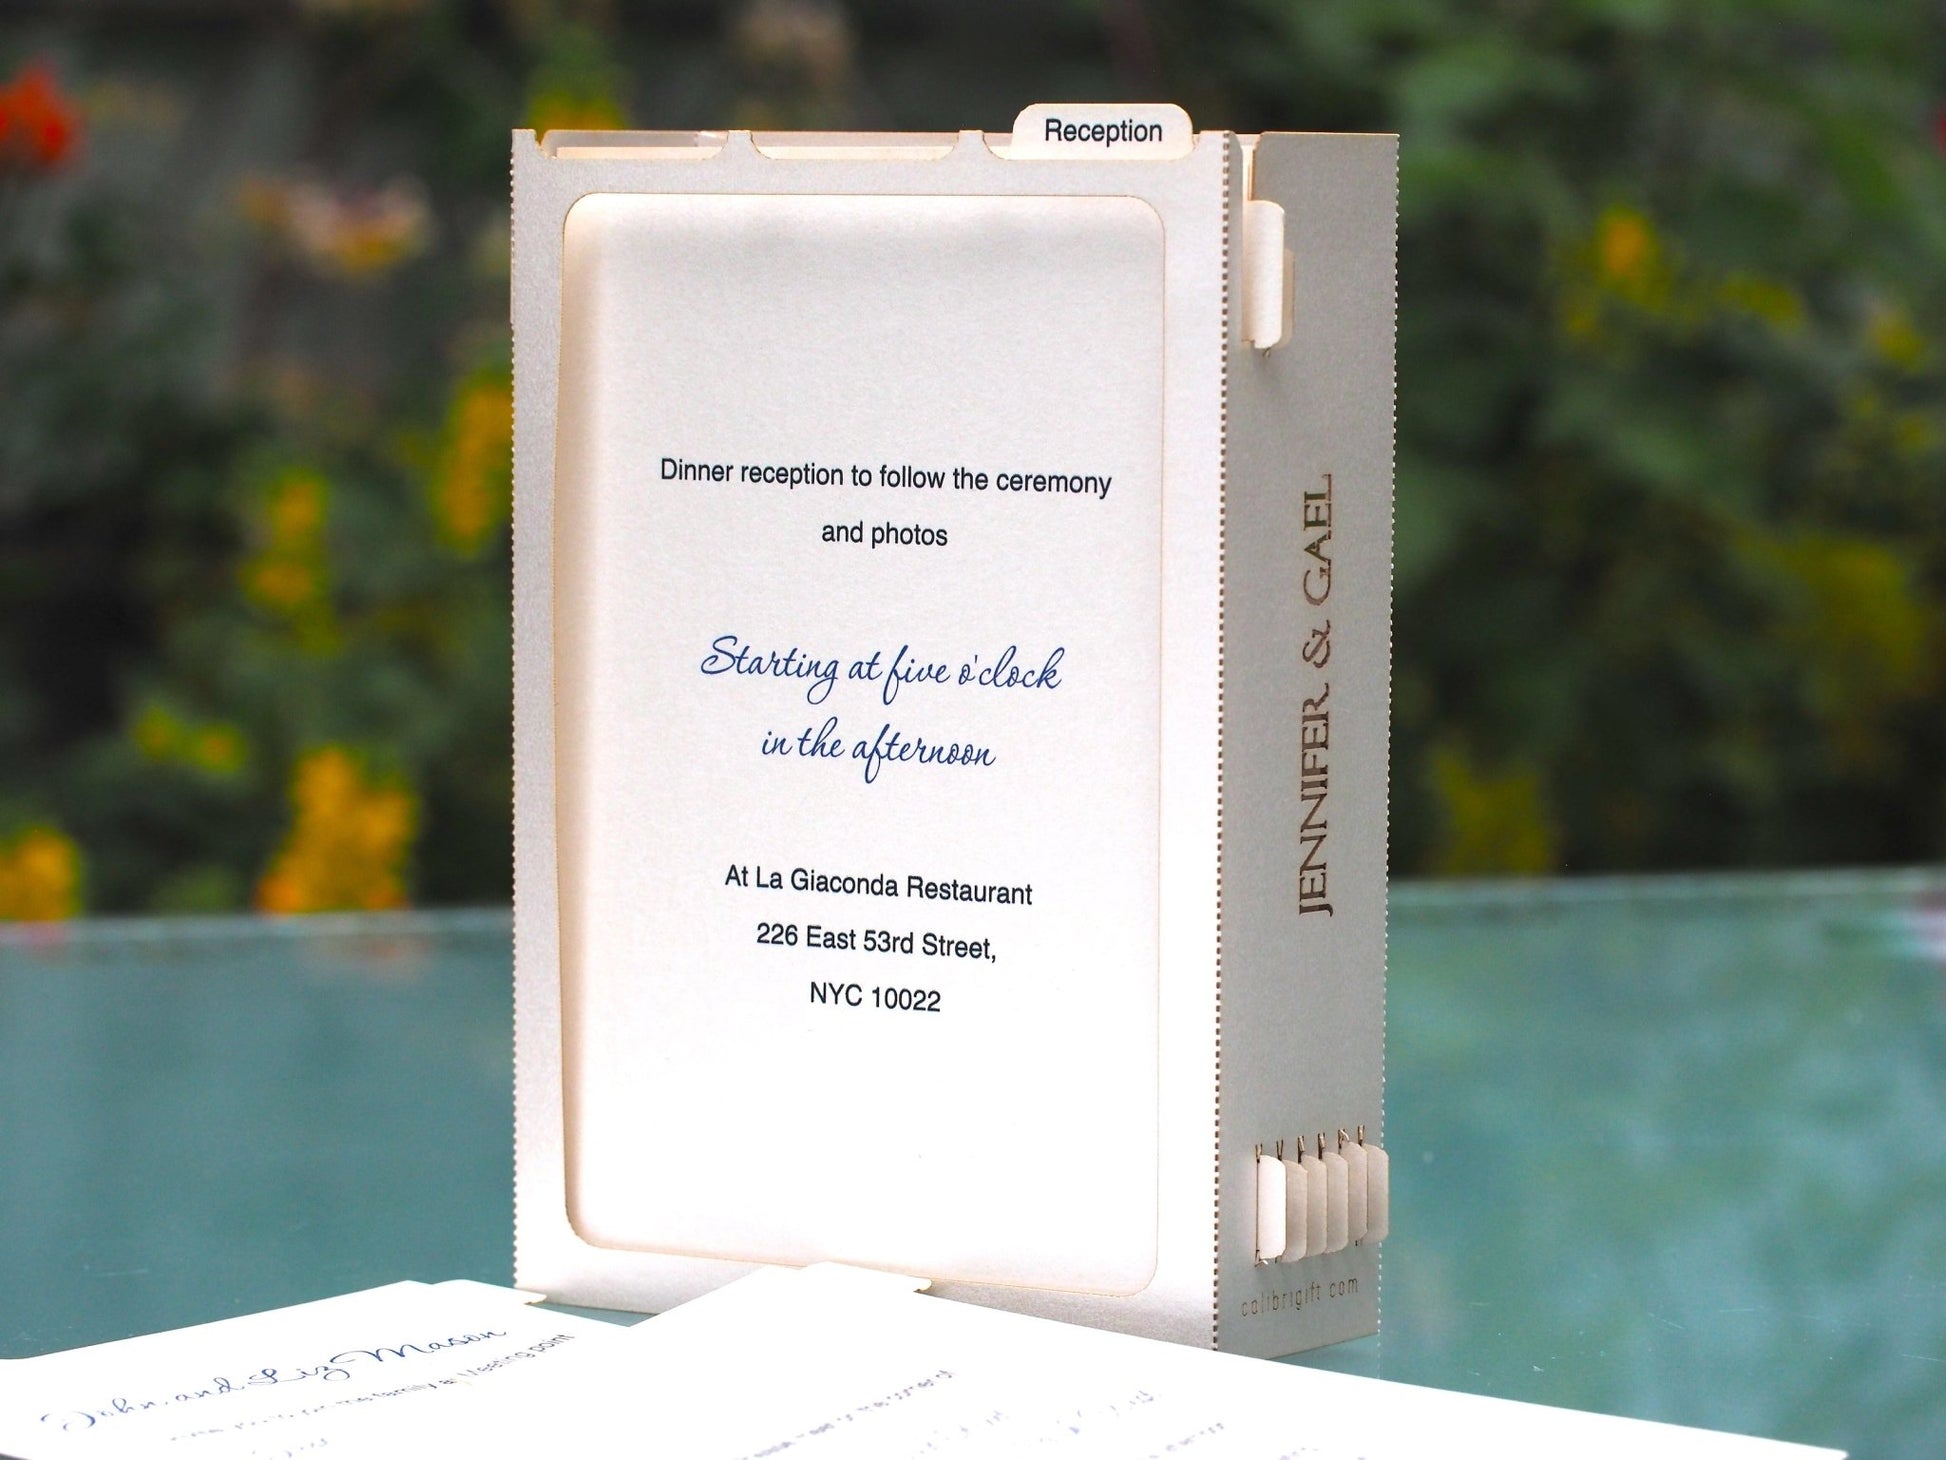 Mission Inn Hotel and Spa wedding invitations. Custom design. Paper pop up card, RSVP . USA Hotel Wedding venue ColibriGift